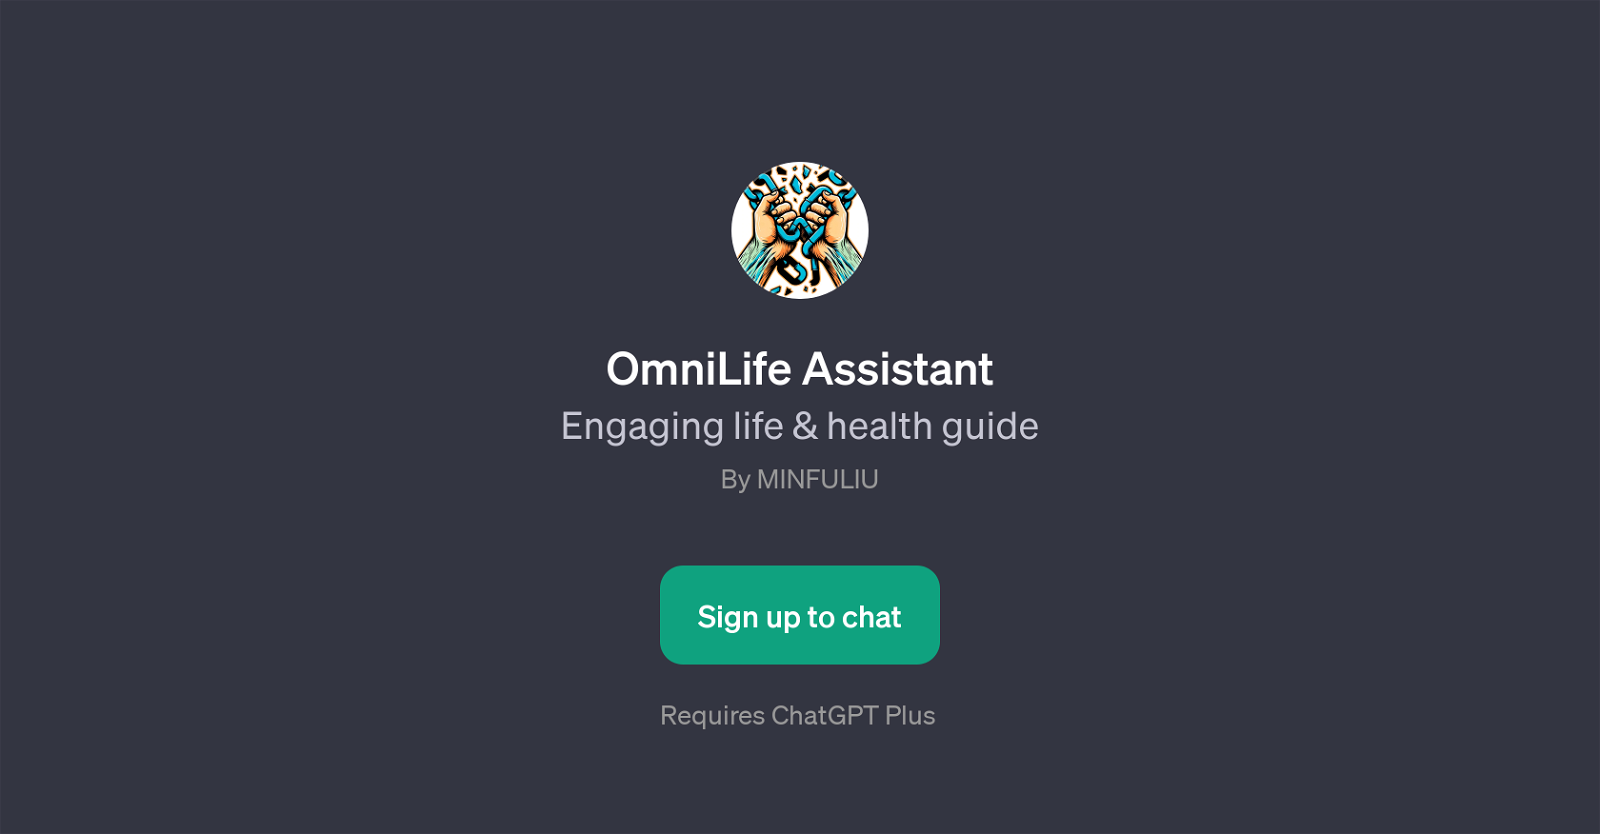 OmniLife Assistant website